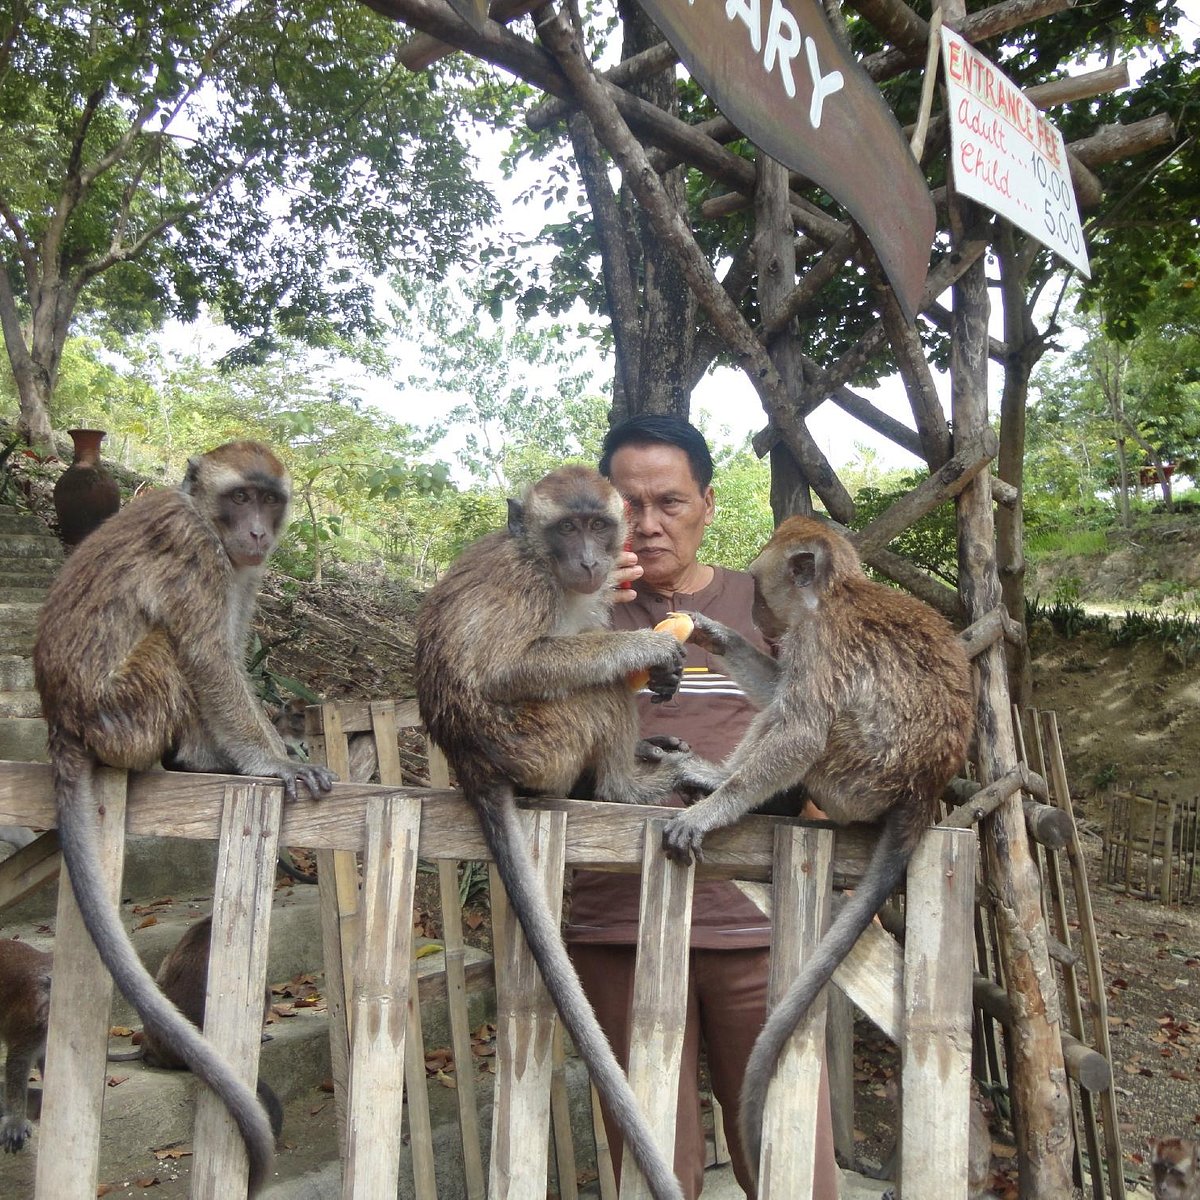 Monkey Sanctuary